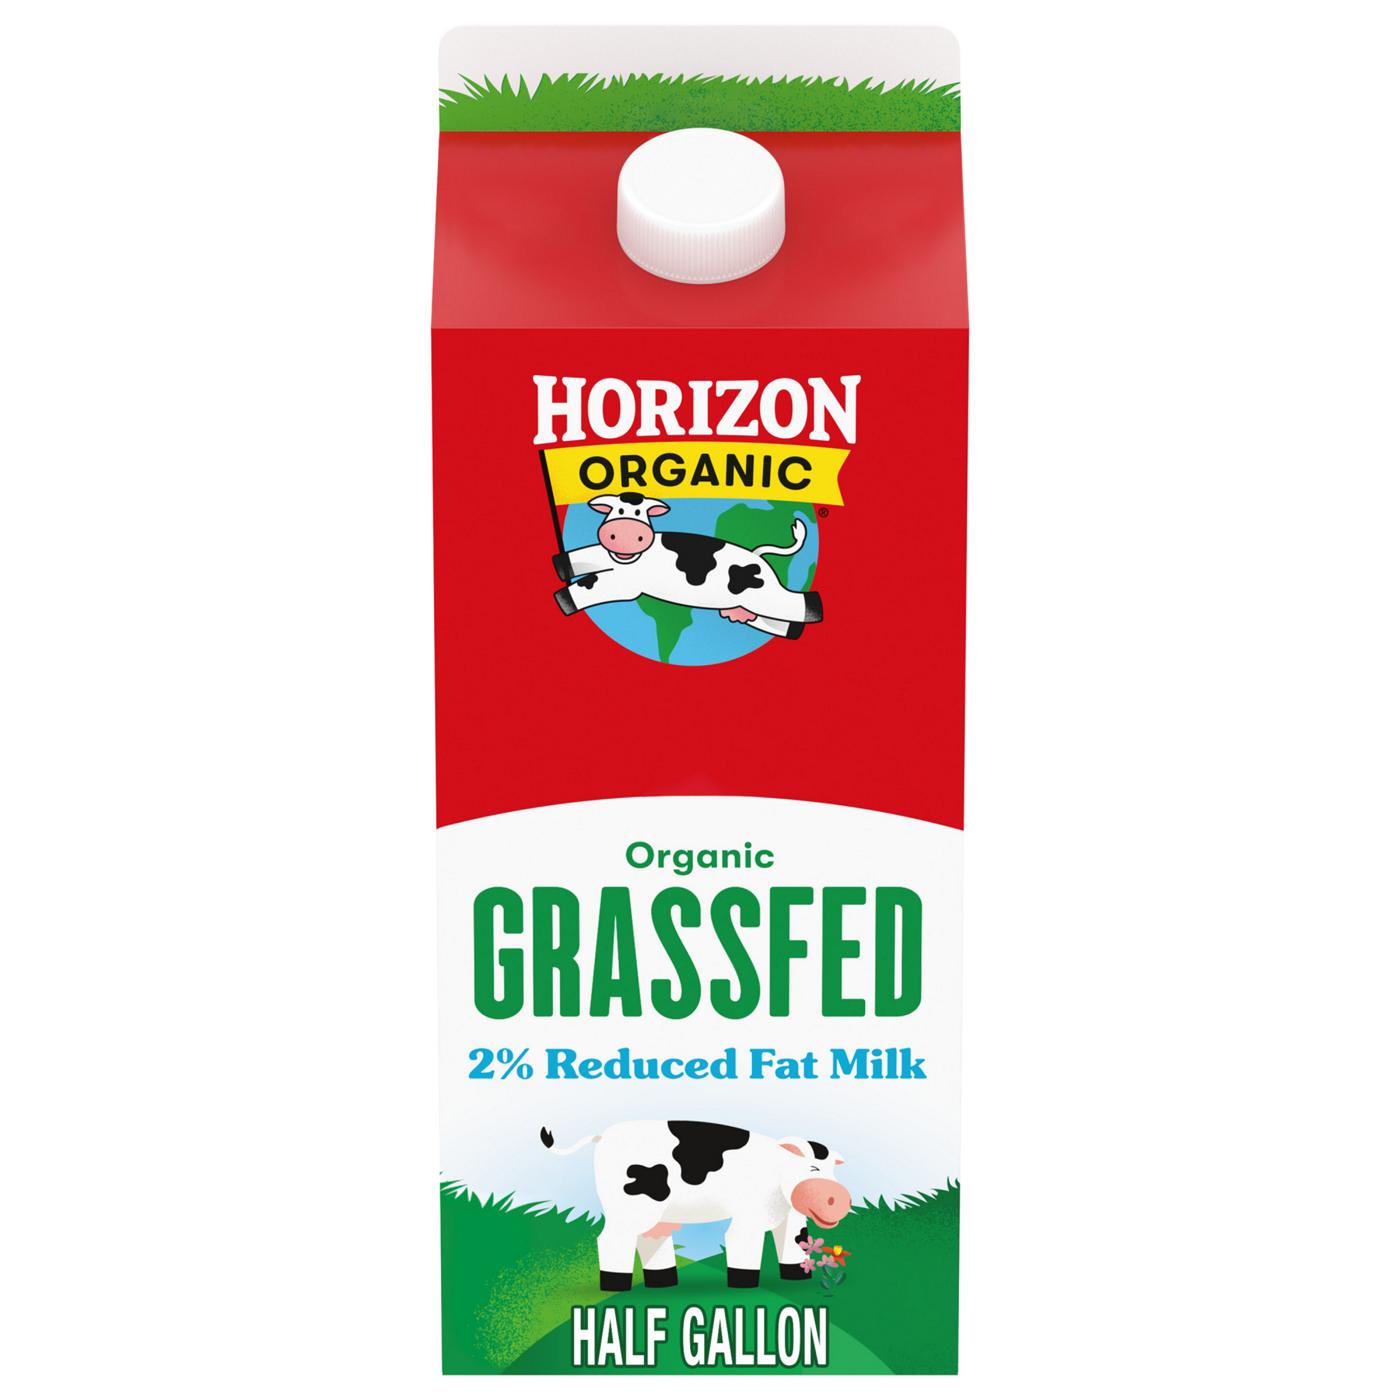 Horizon Organic Grassfed 2% Reduced Fat Milk; image 1 of 6